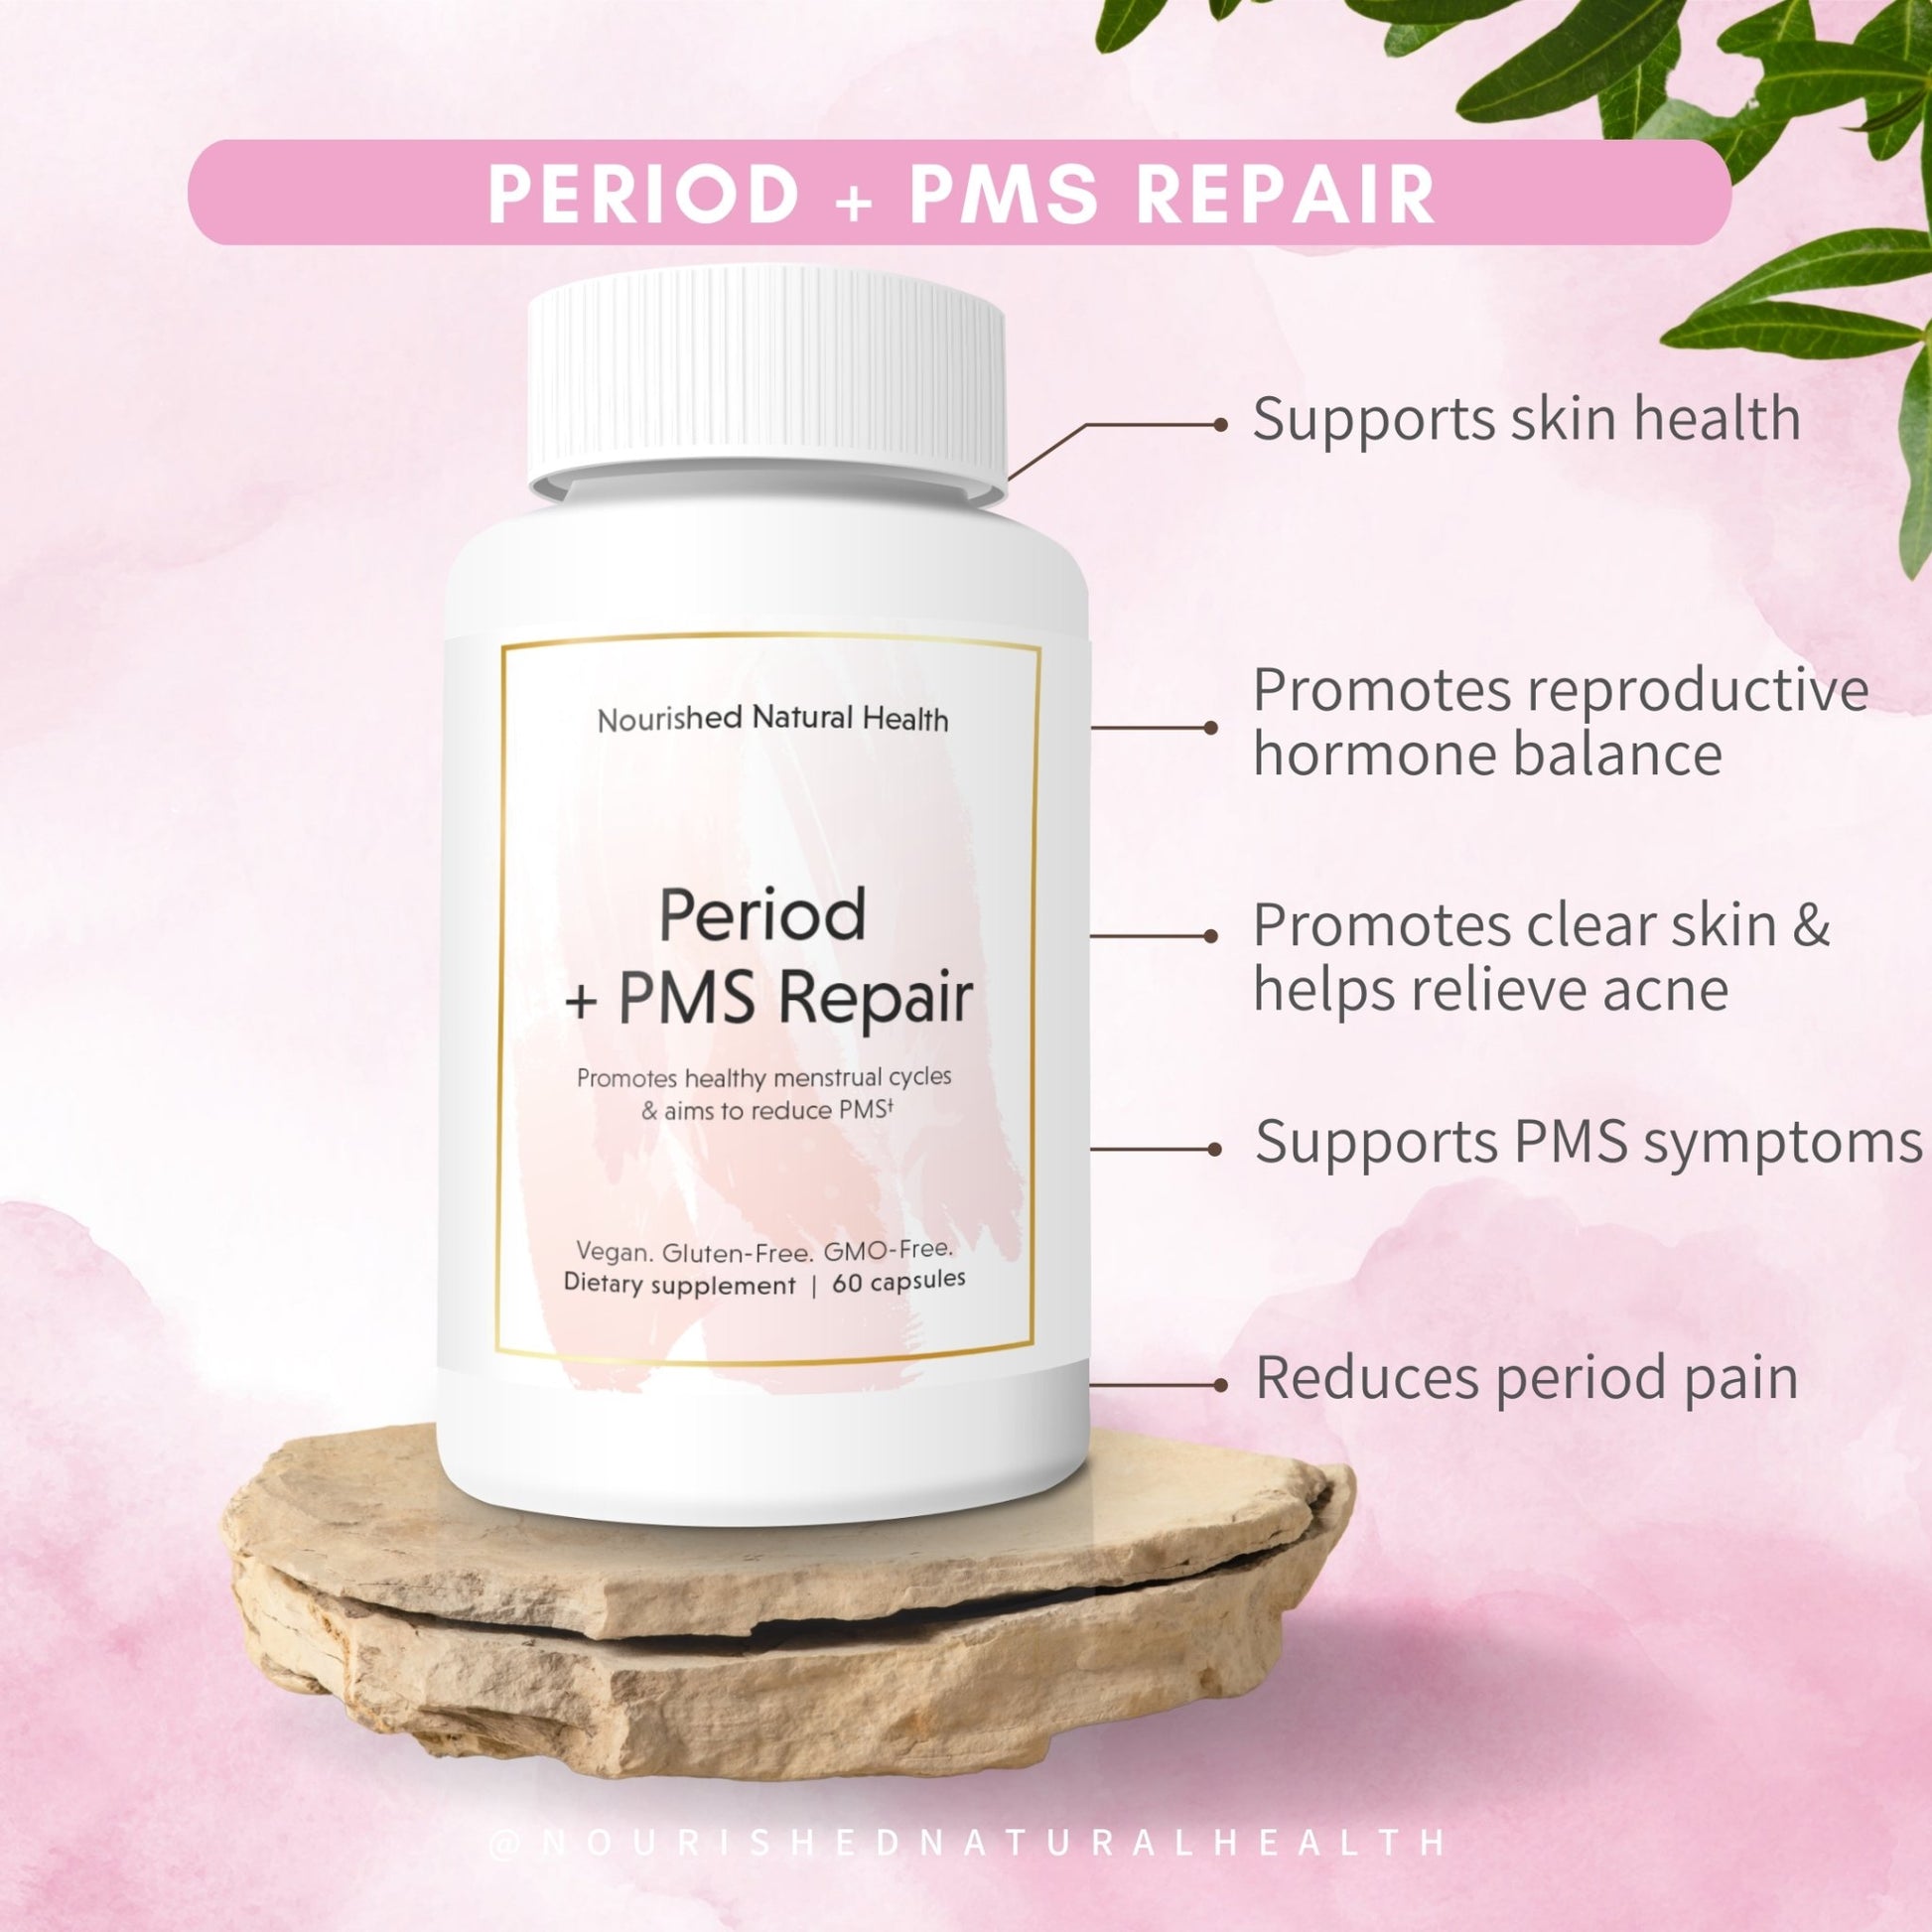 Nourished Period + PMS Repair - Nourished Natural Health